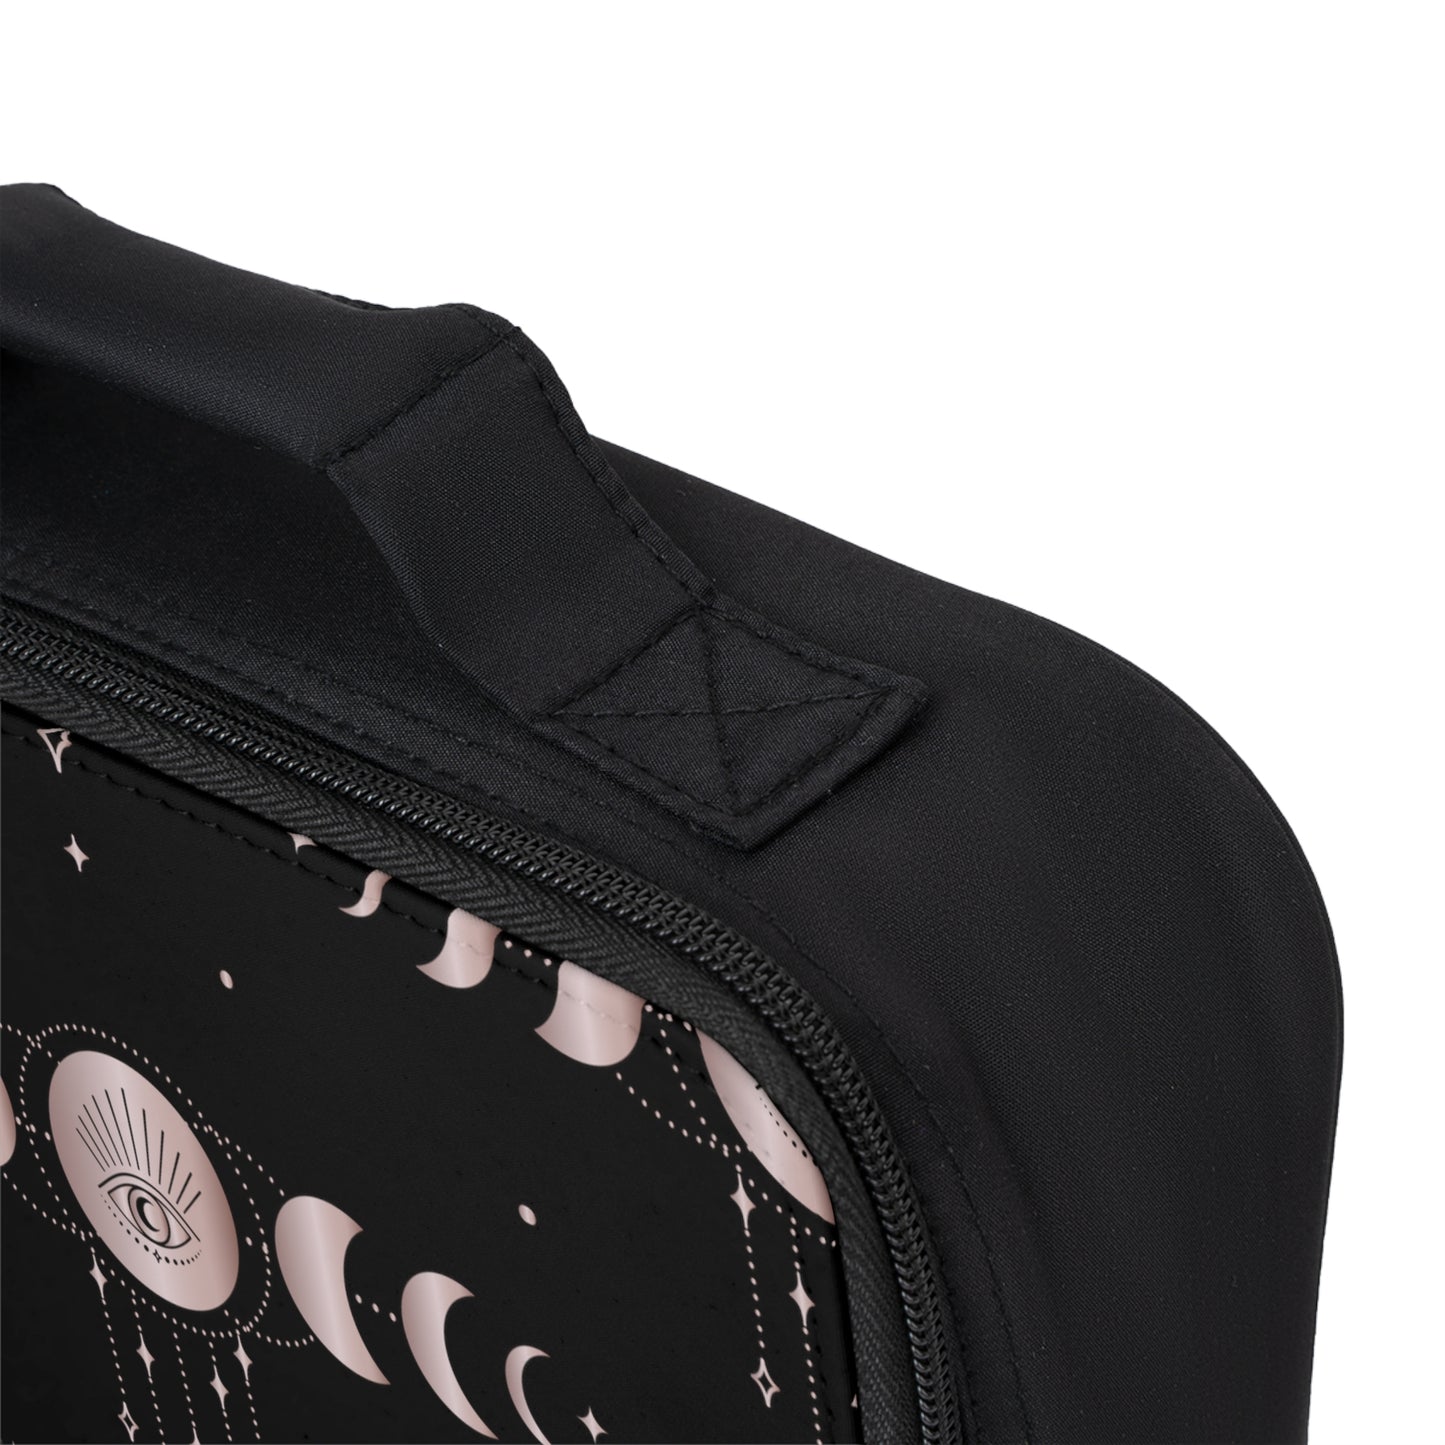 Moon Phase Zipper Storage/Lunch Bag